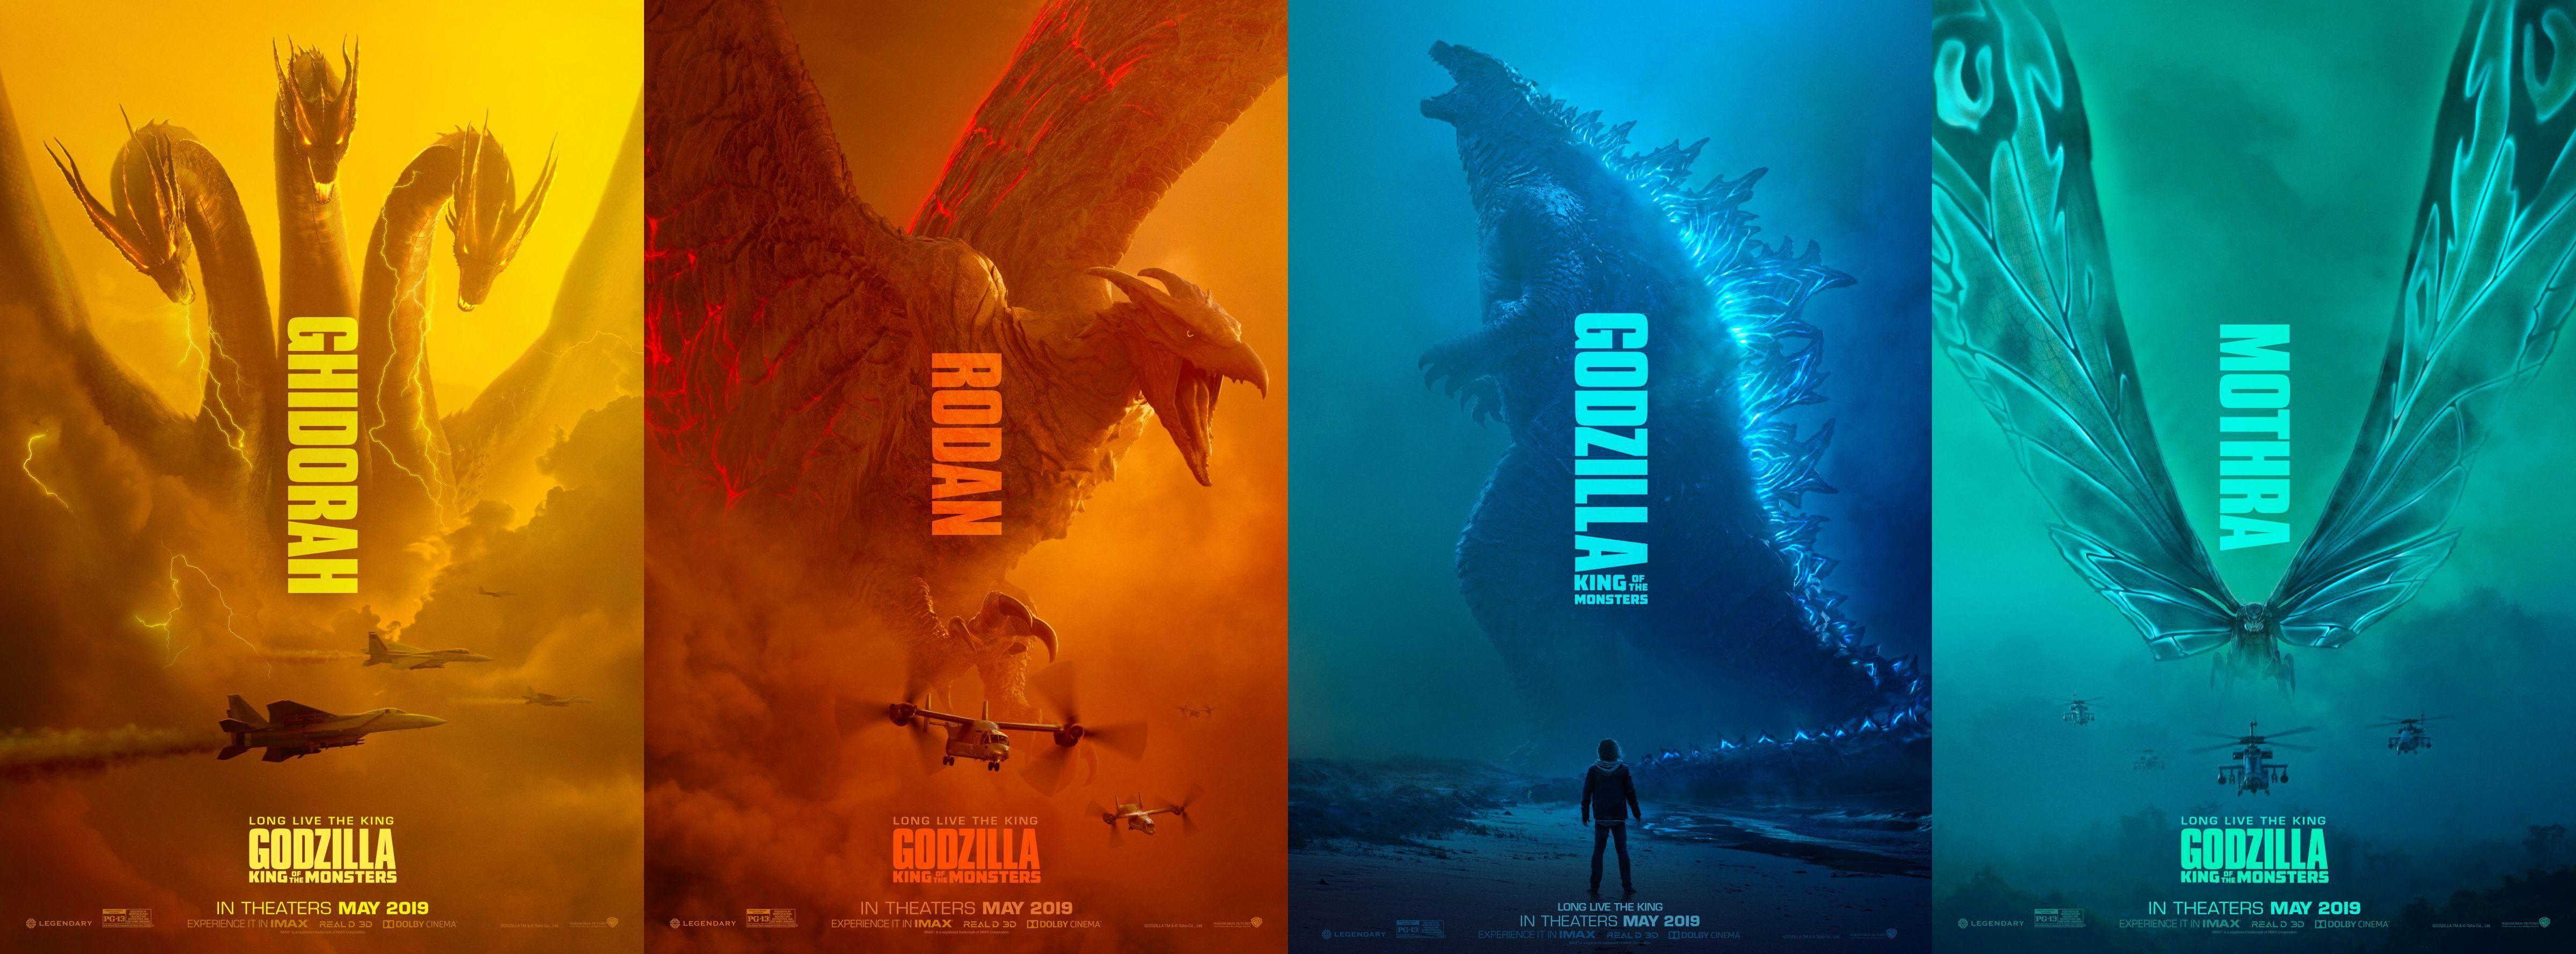 Godzilla Comic-Con Poster Takes On King Ghidorah | Cosmic Book News